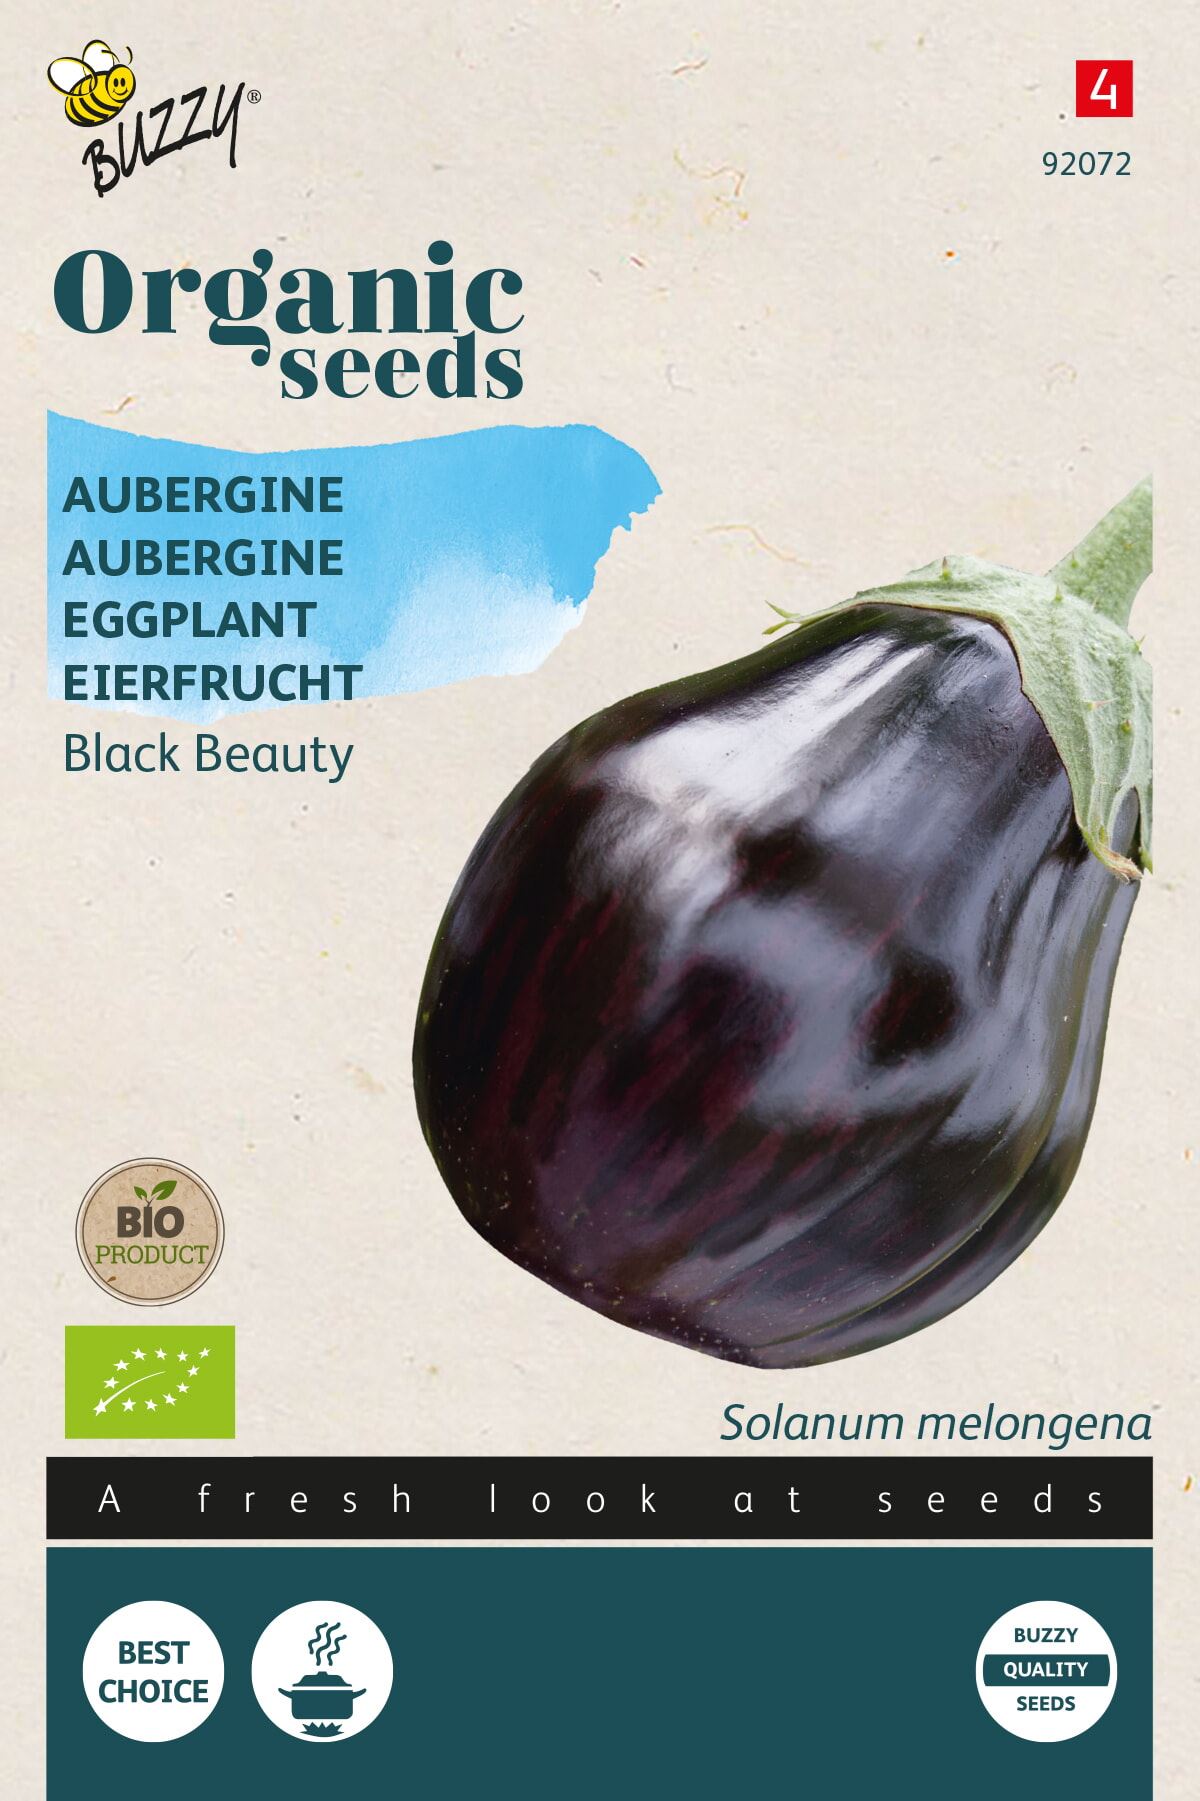 Buzzy® Bio Eggplant seeds - Black Beauty